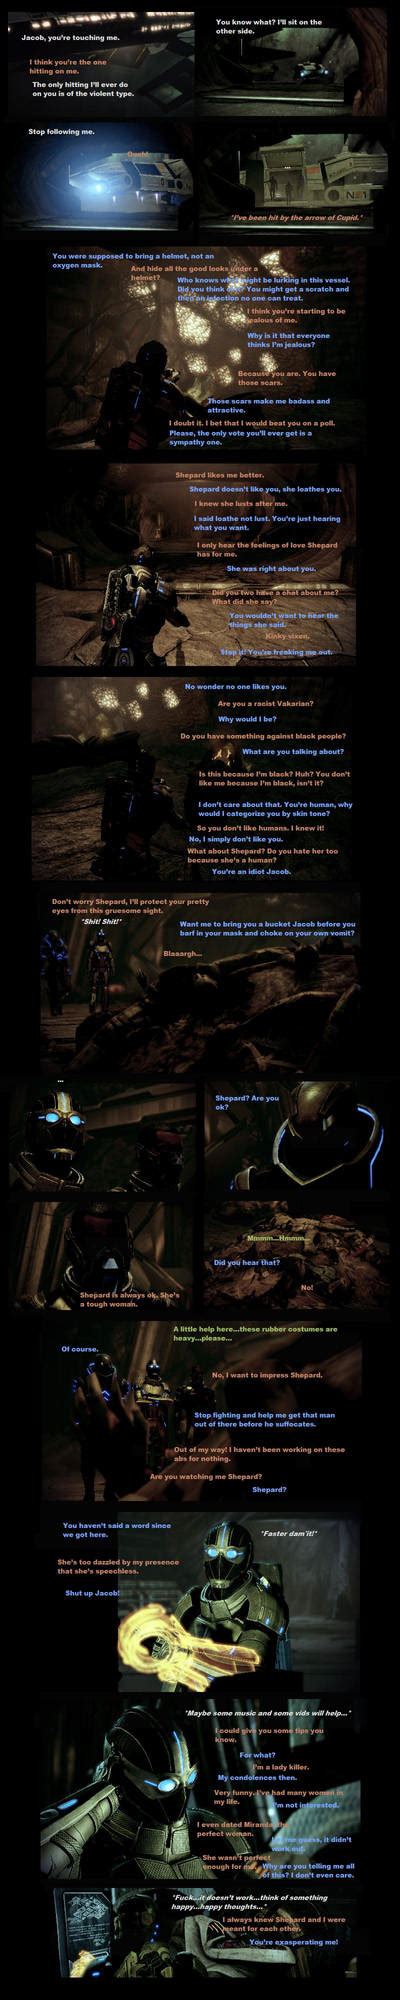 Mass Effect 2 Adventure P116 By Pomponorium On Deviantart